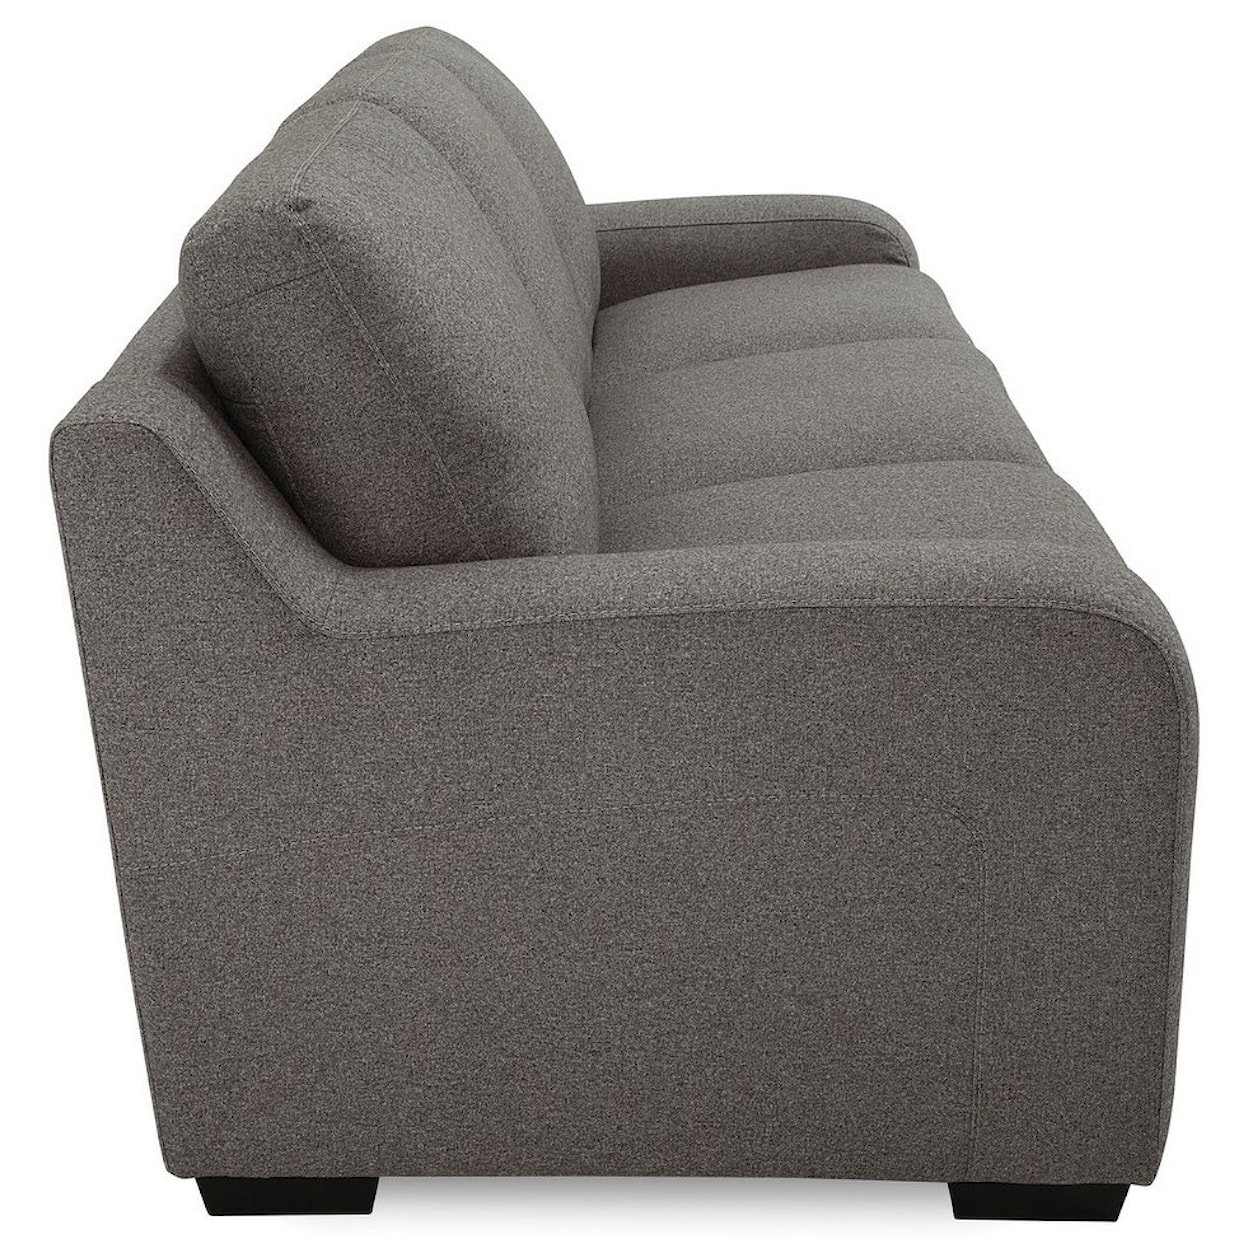 Palliser Flex Flex 3-Seat Sofa